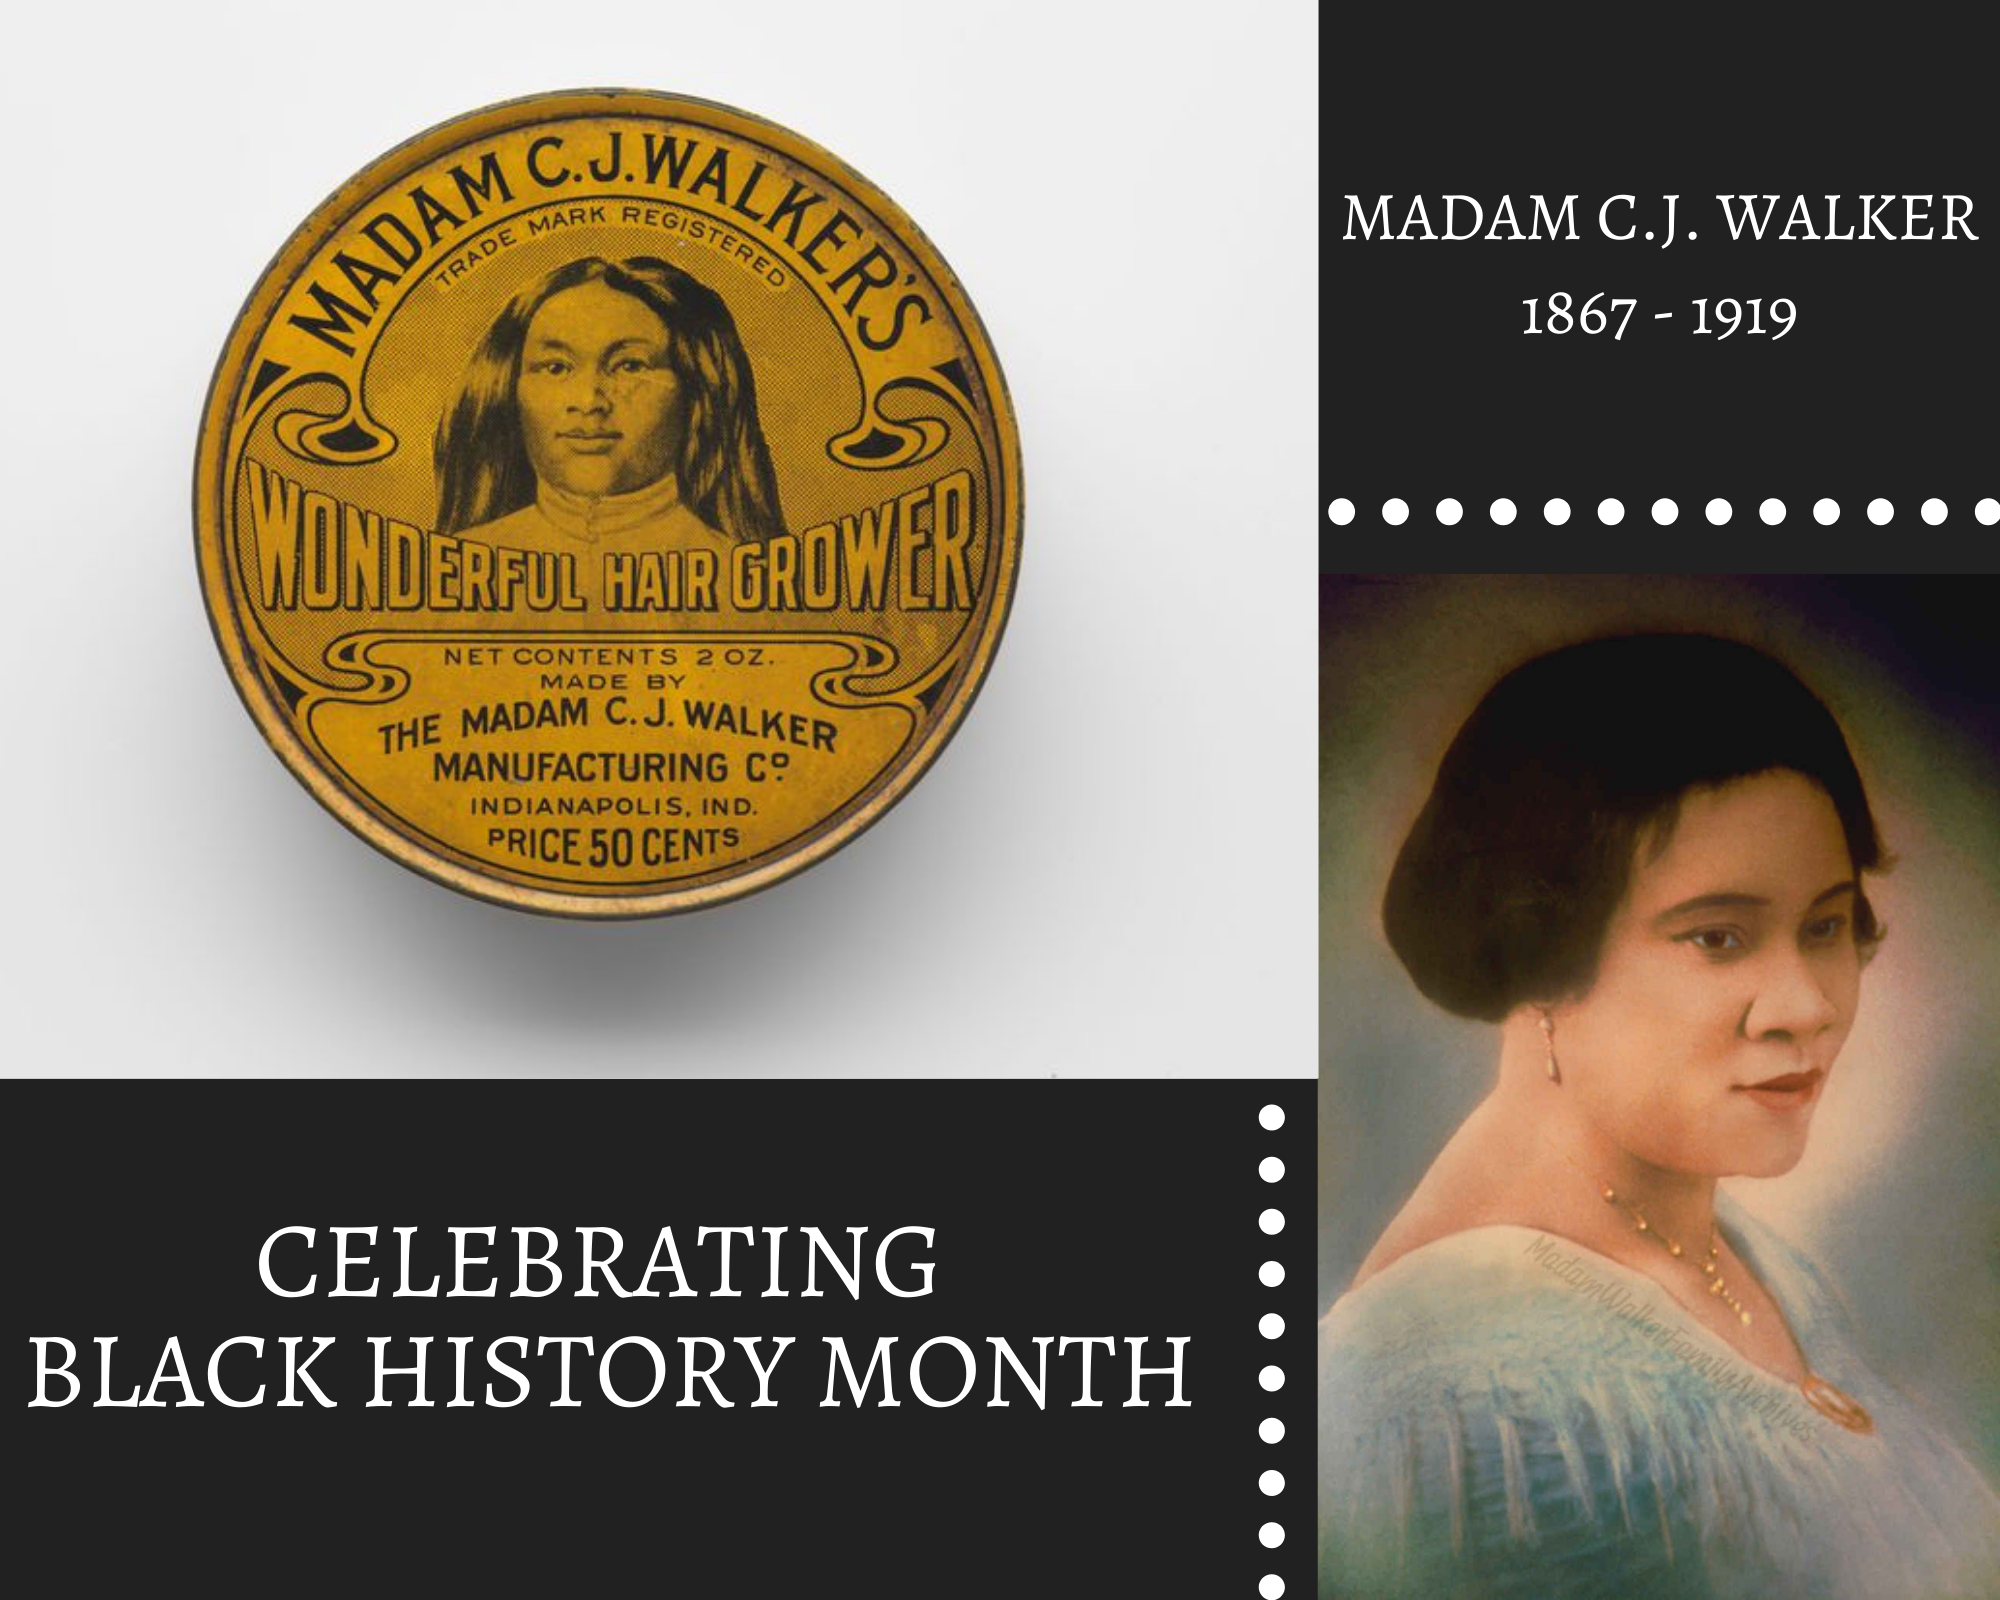 Christian Academy School System | Celebrating Black History Month | Madam C.J. Walker